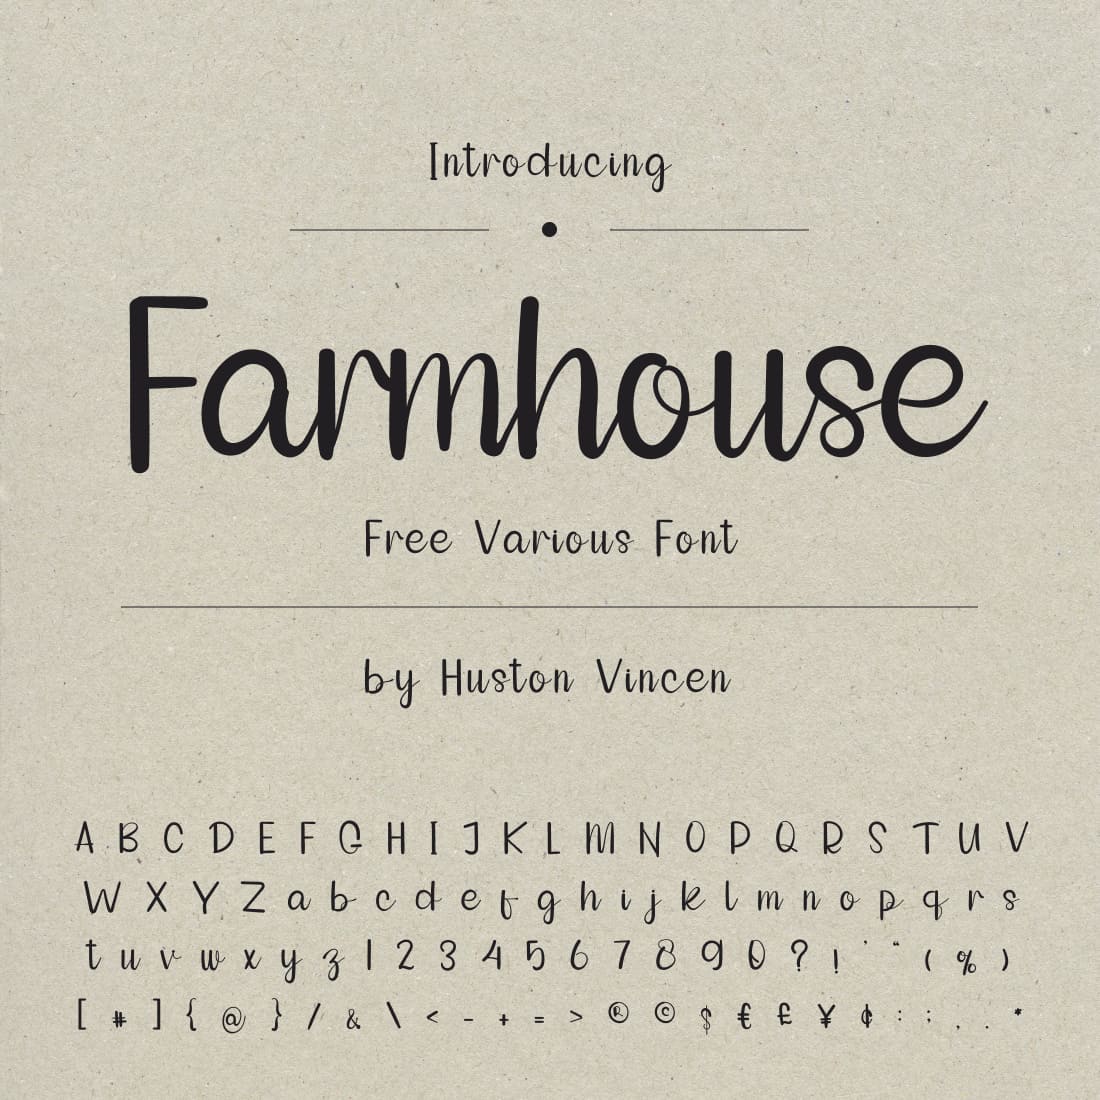 Free farmhouse font MasterBundles main cover.